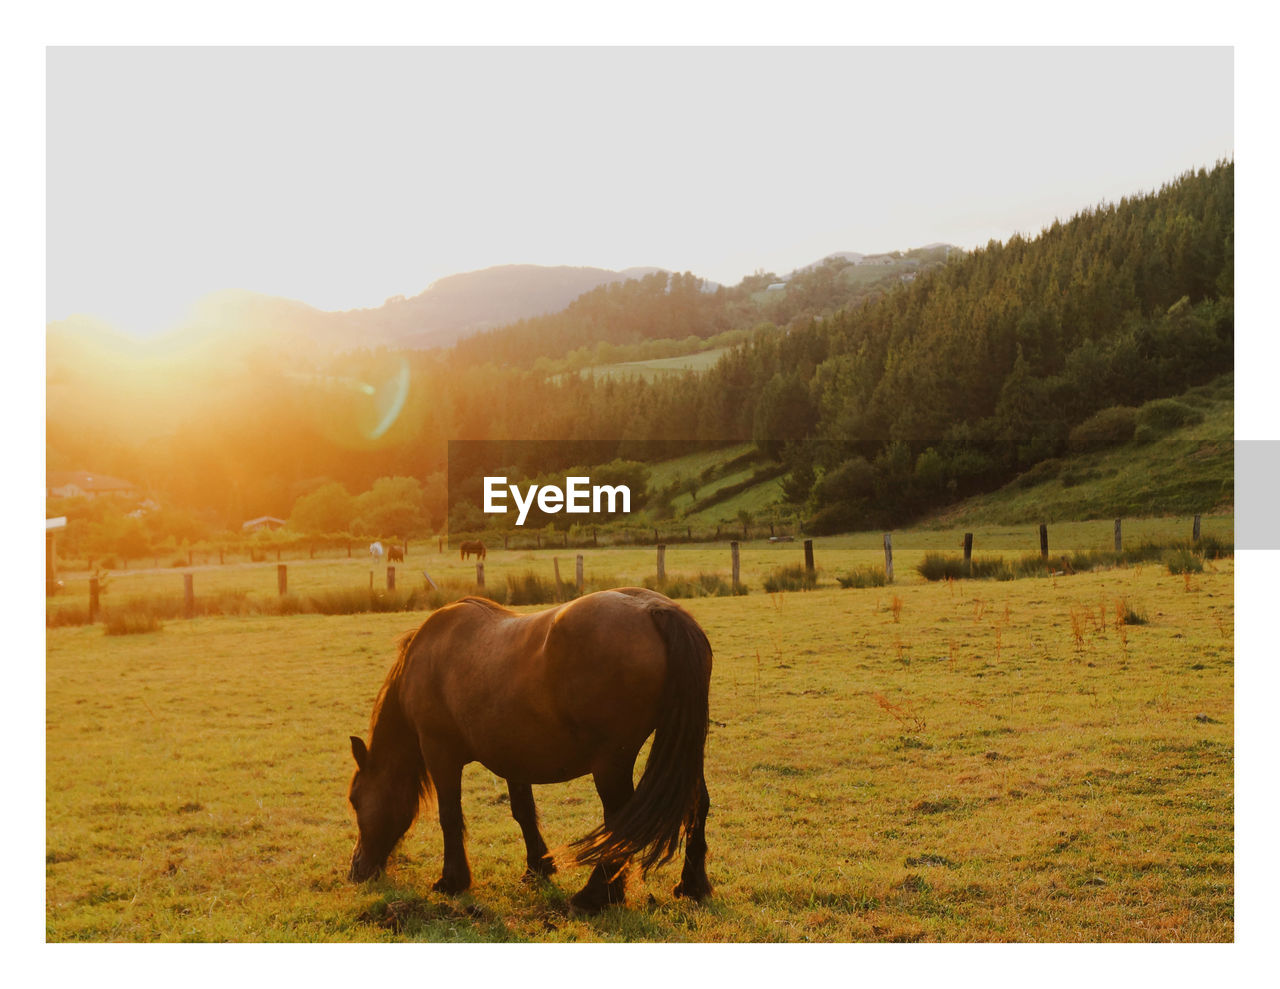 Horse eating grass in a sunset. golden hour mountain sunset 